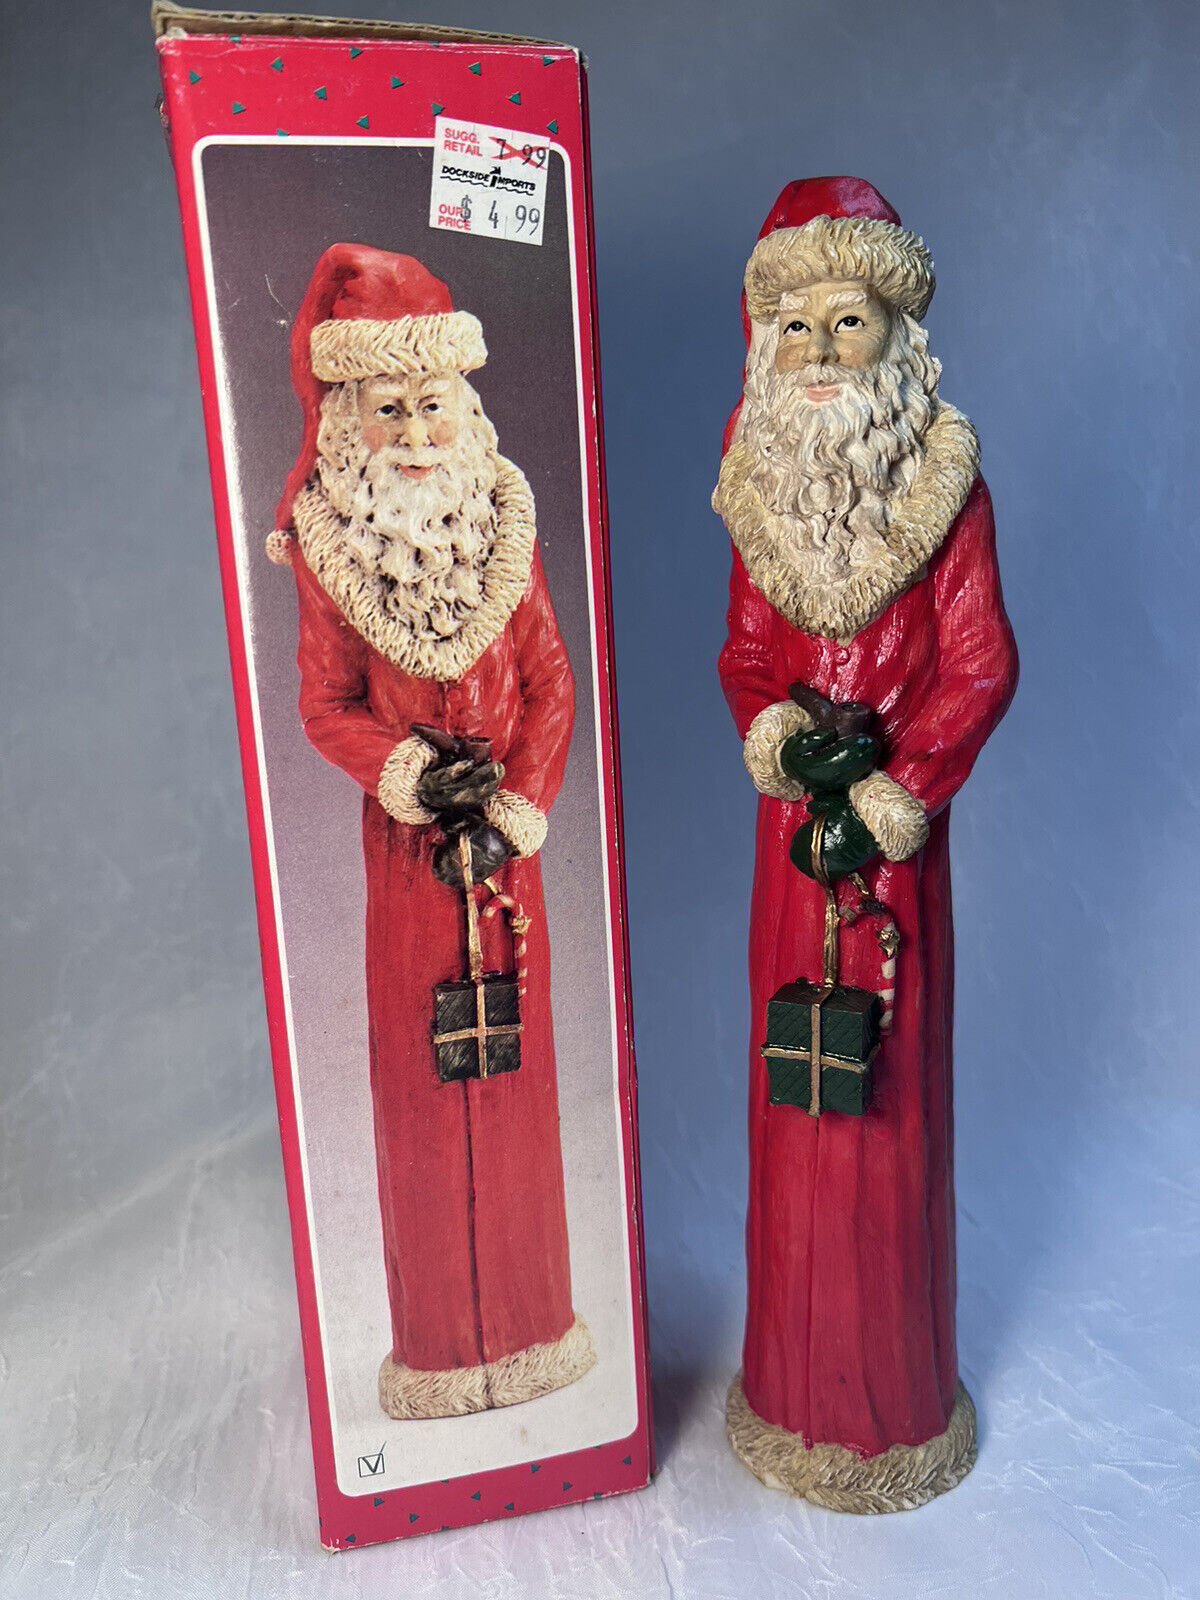 Artmark Pencil Santa Claus Vintage Figurine Christmas Holiday Hand Crafted 1993